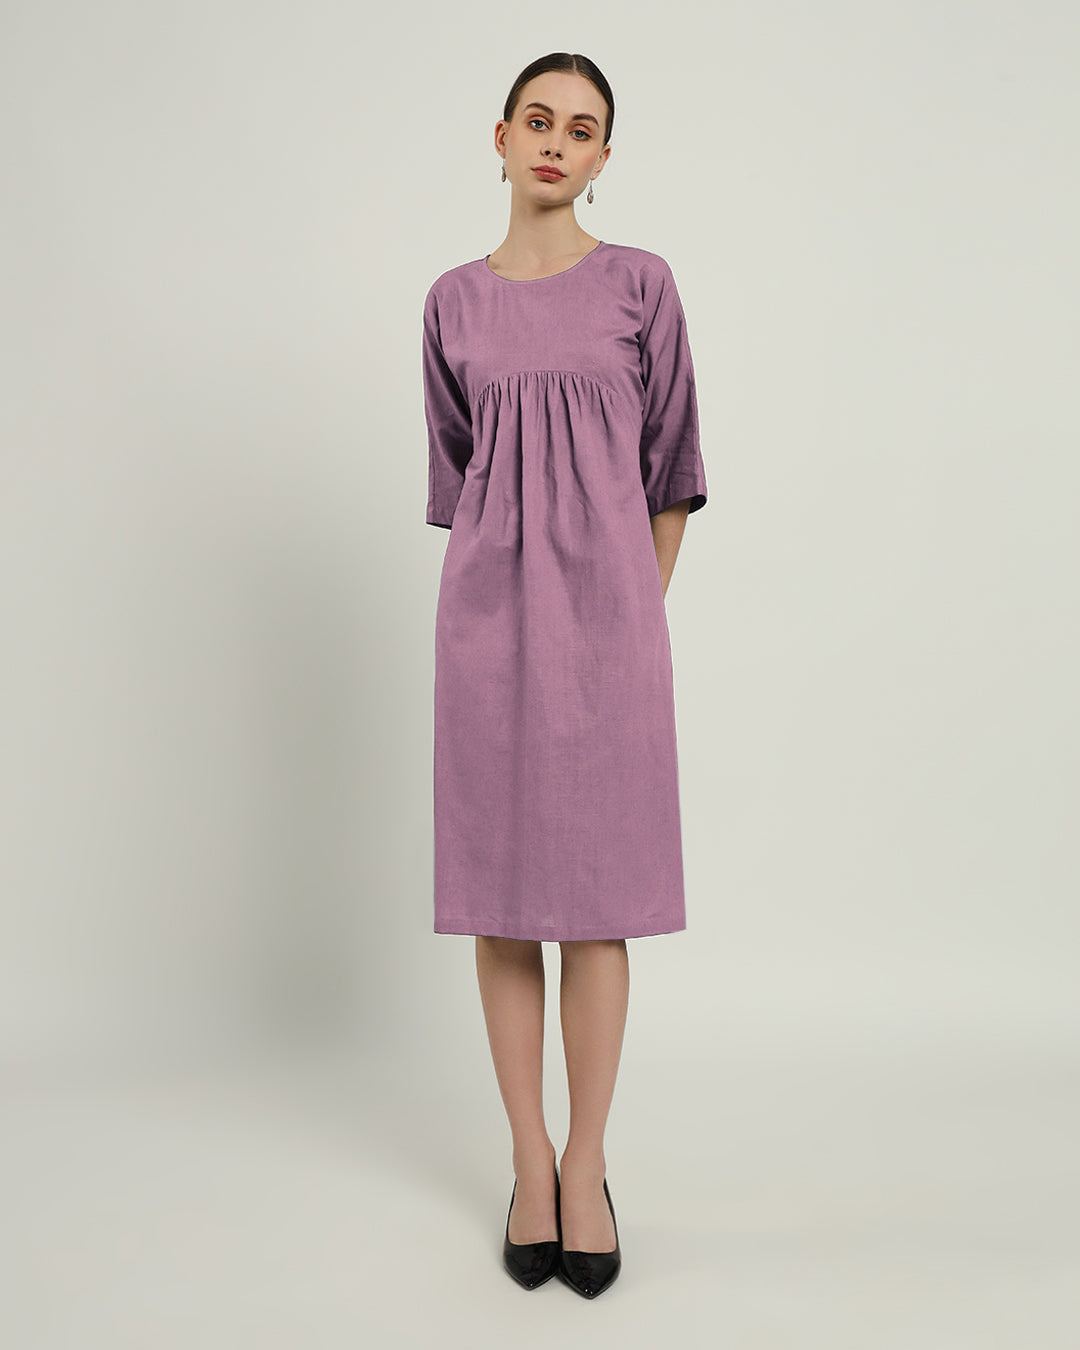 The Monrovia Purple Swirl Cotton Dress